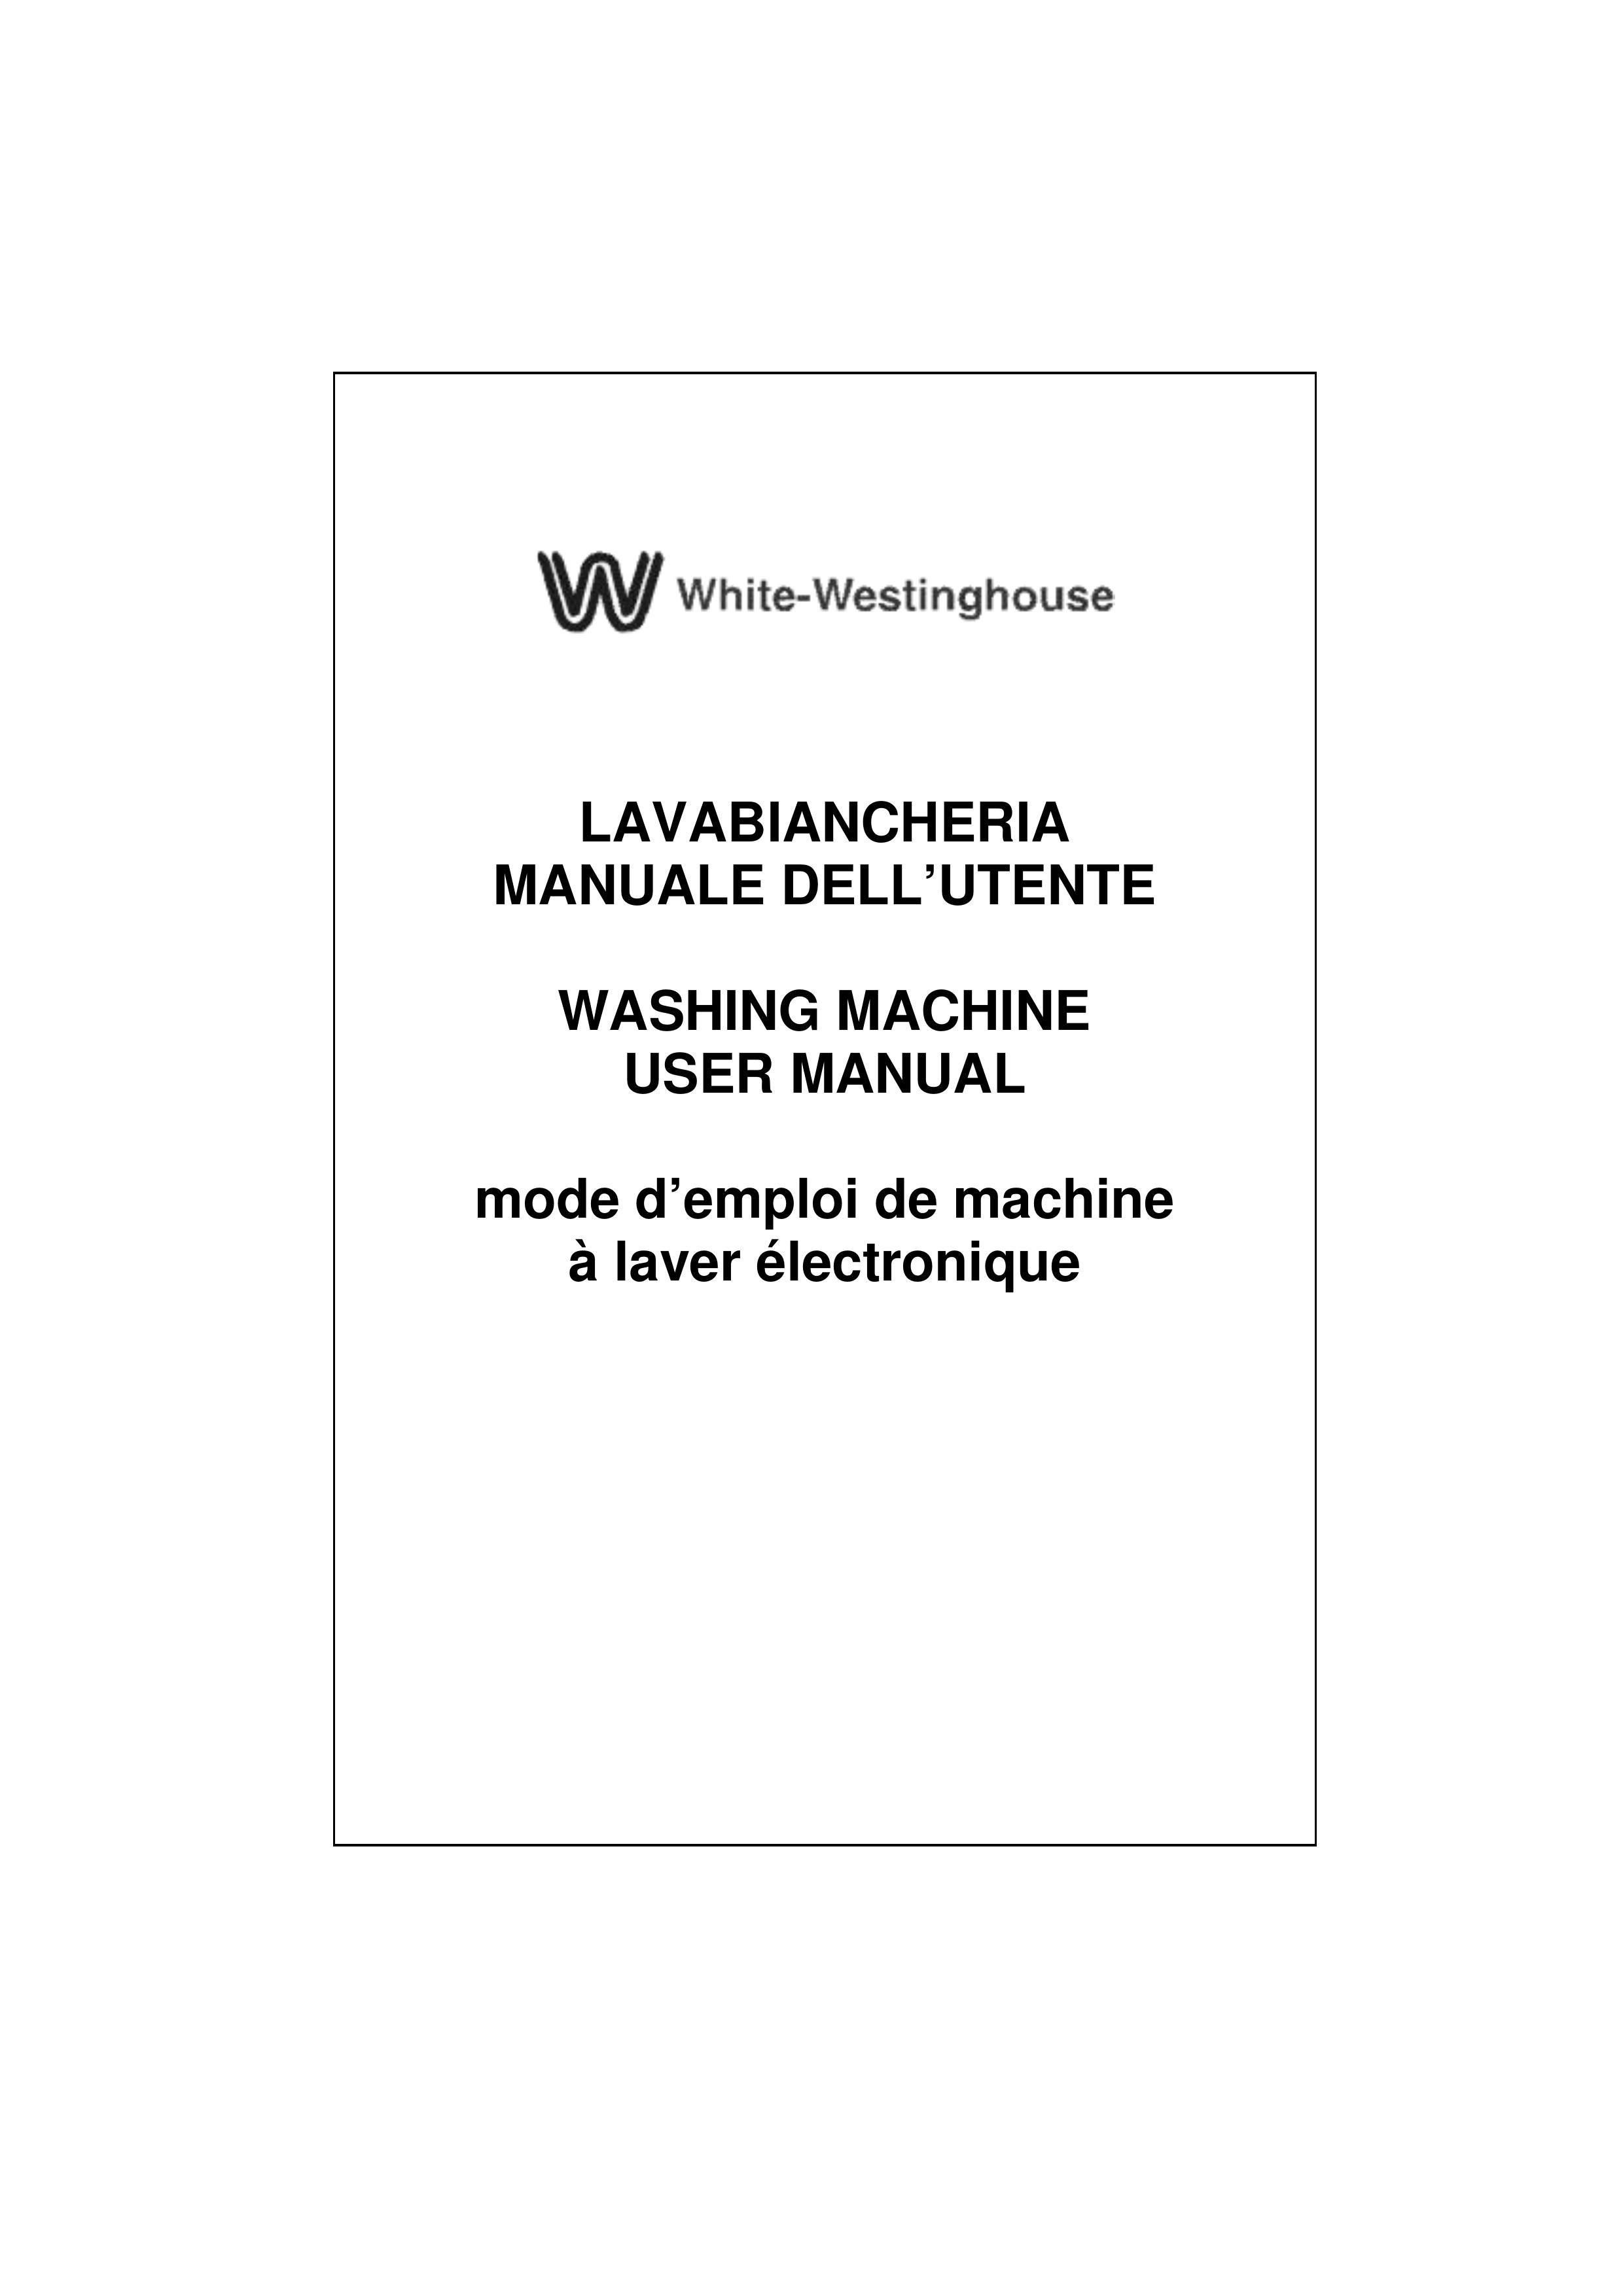 White-Westinghouse WM639 Washer User Manual